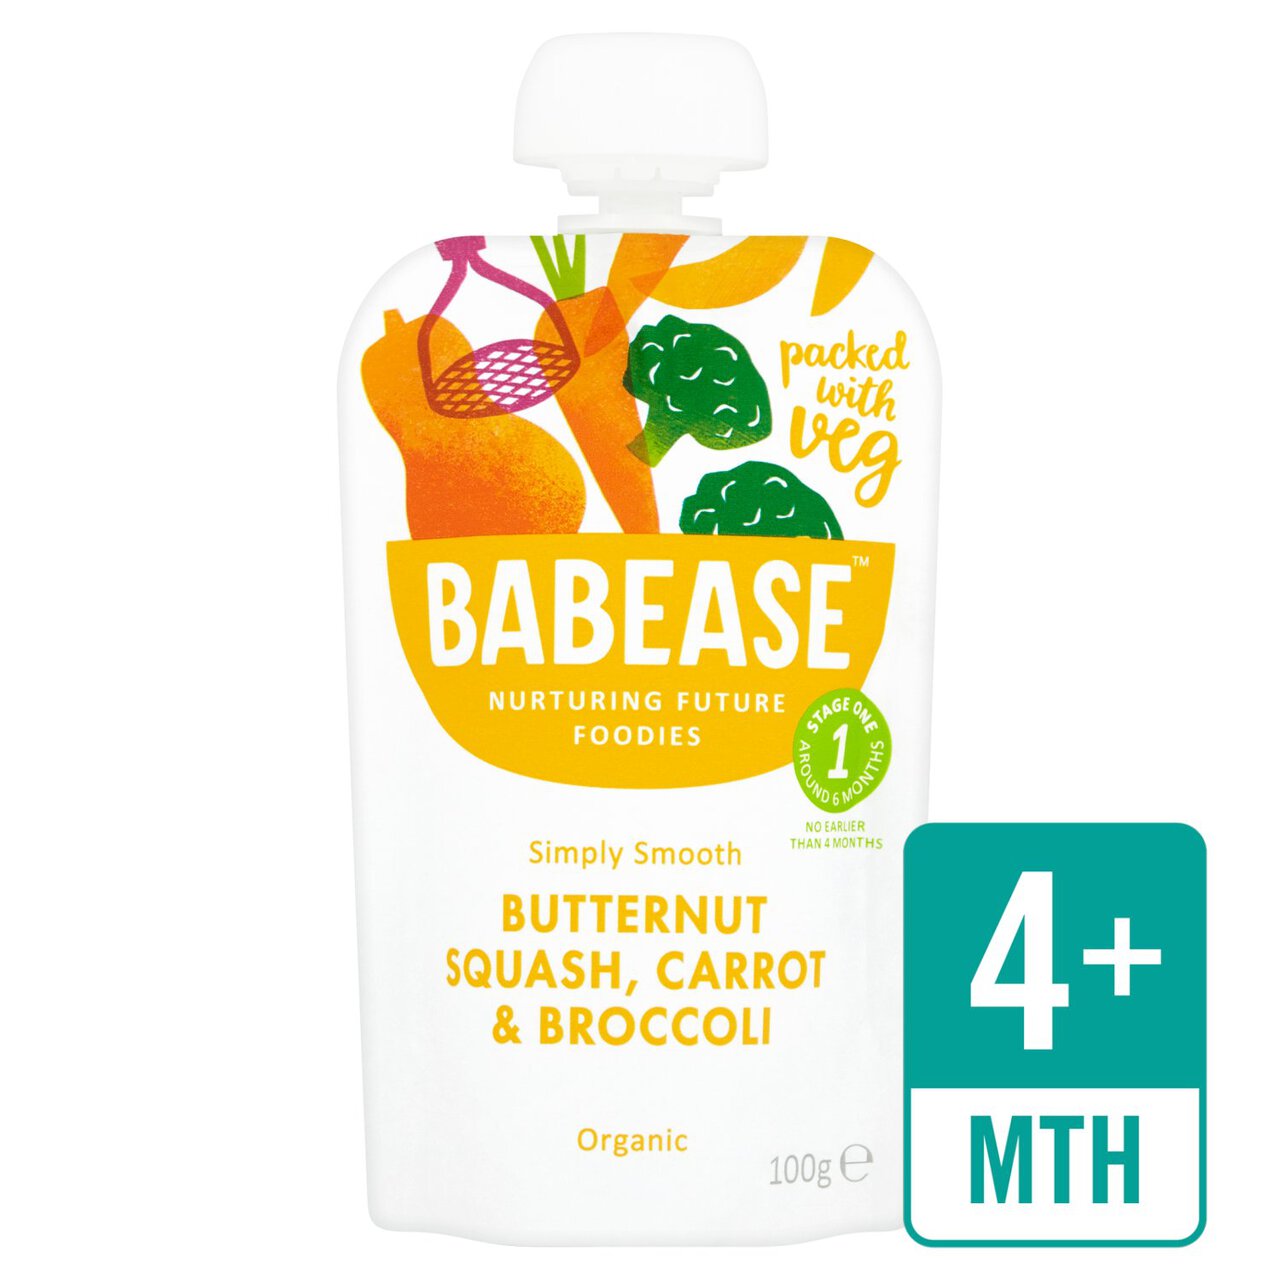 Babease Organic Butternut Squash, Carrot & Broccoli Pouch, 4 mths+ 100g